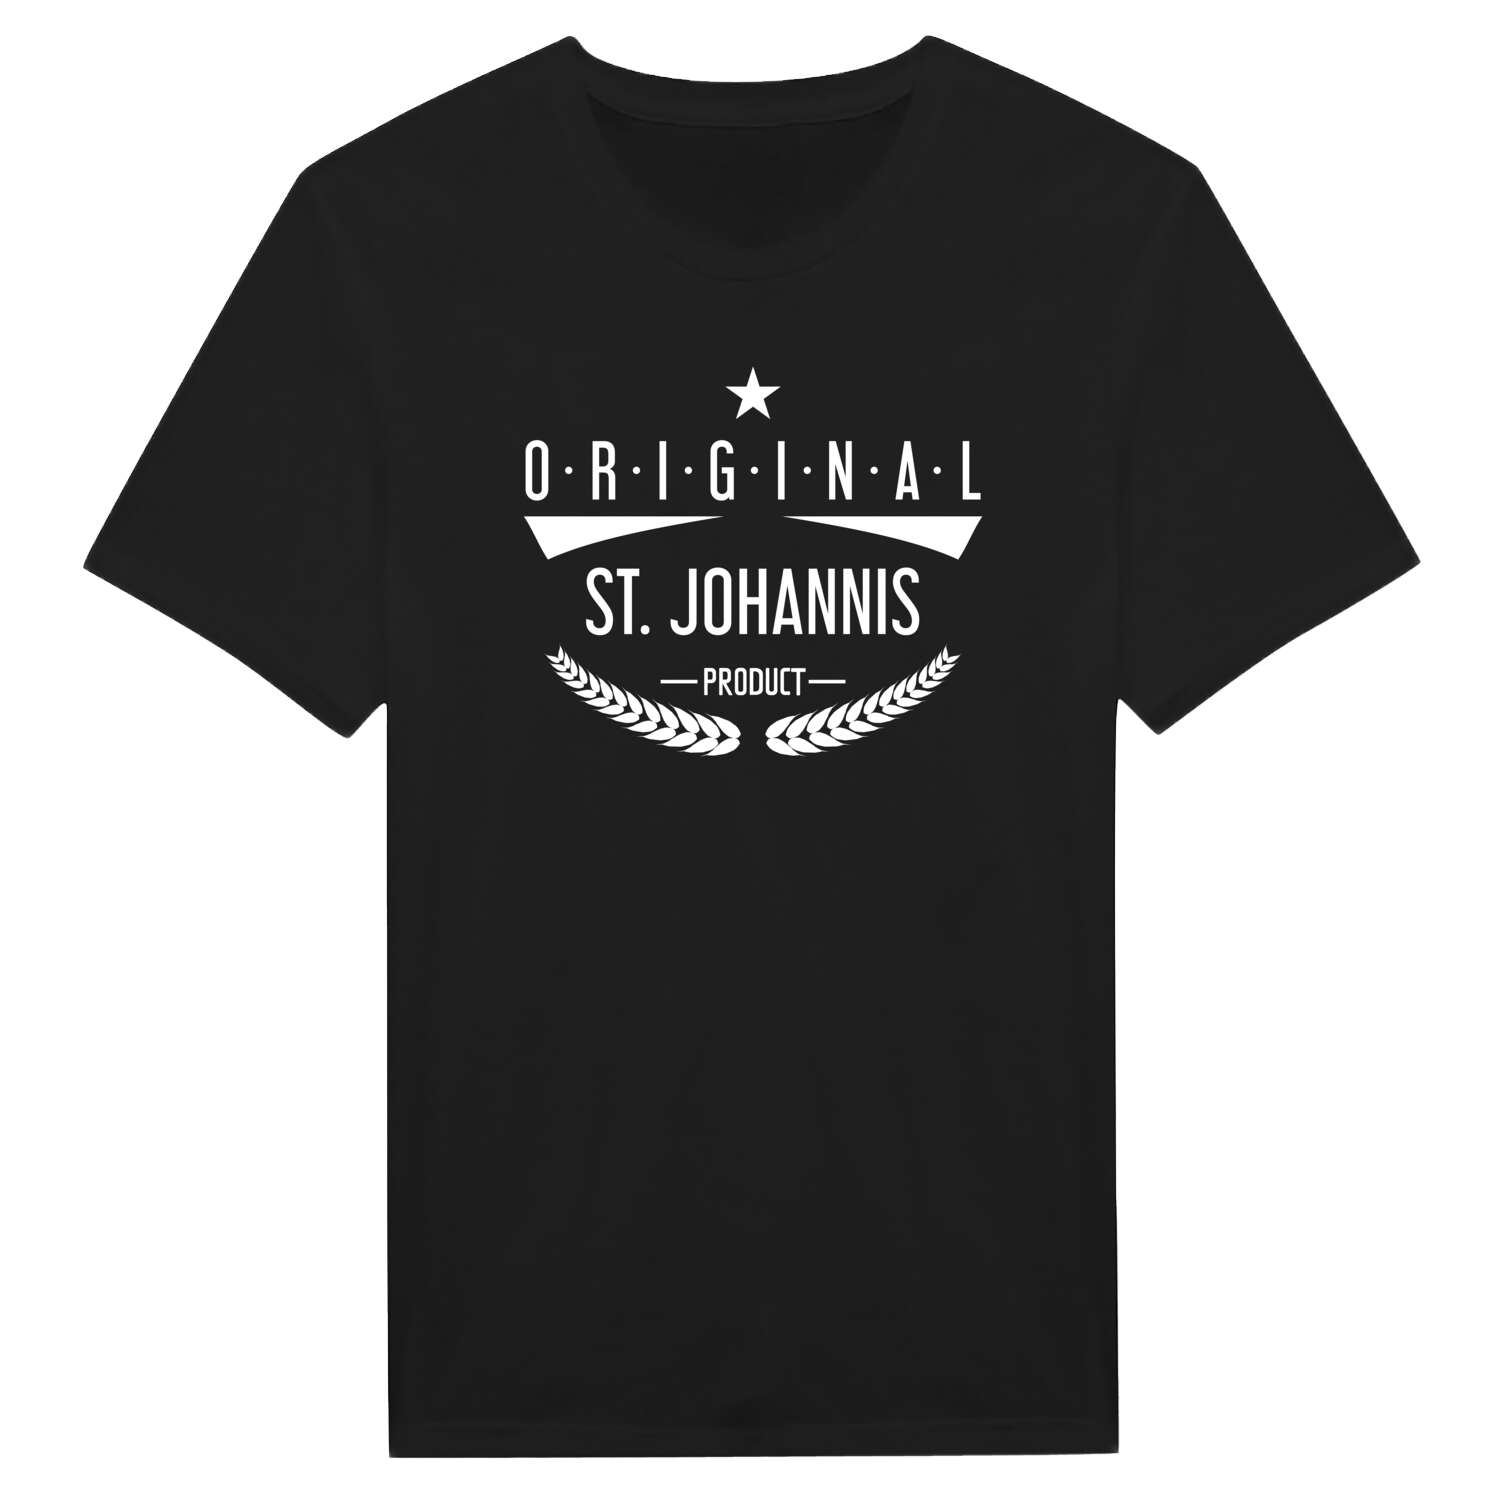 St. Johannis T-Shirt »Original Product«